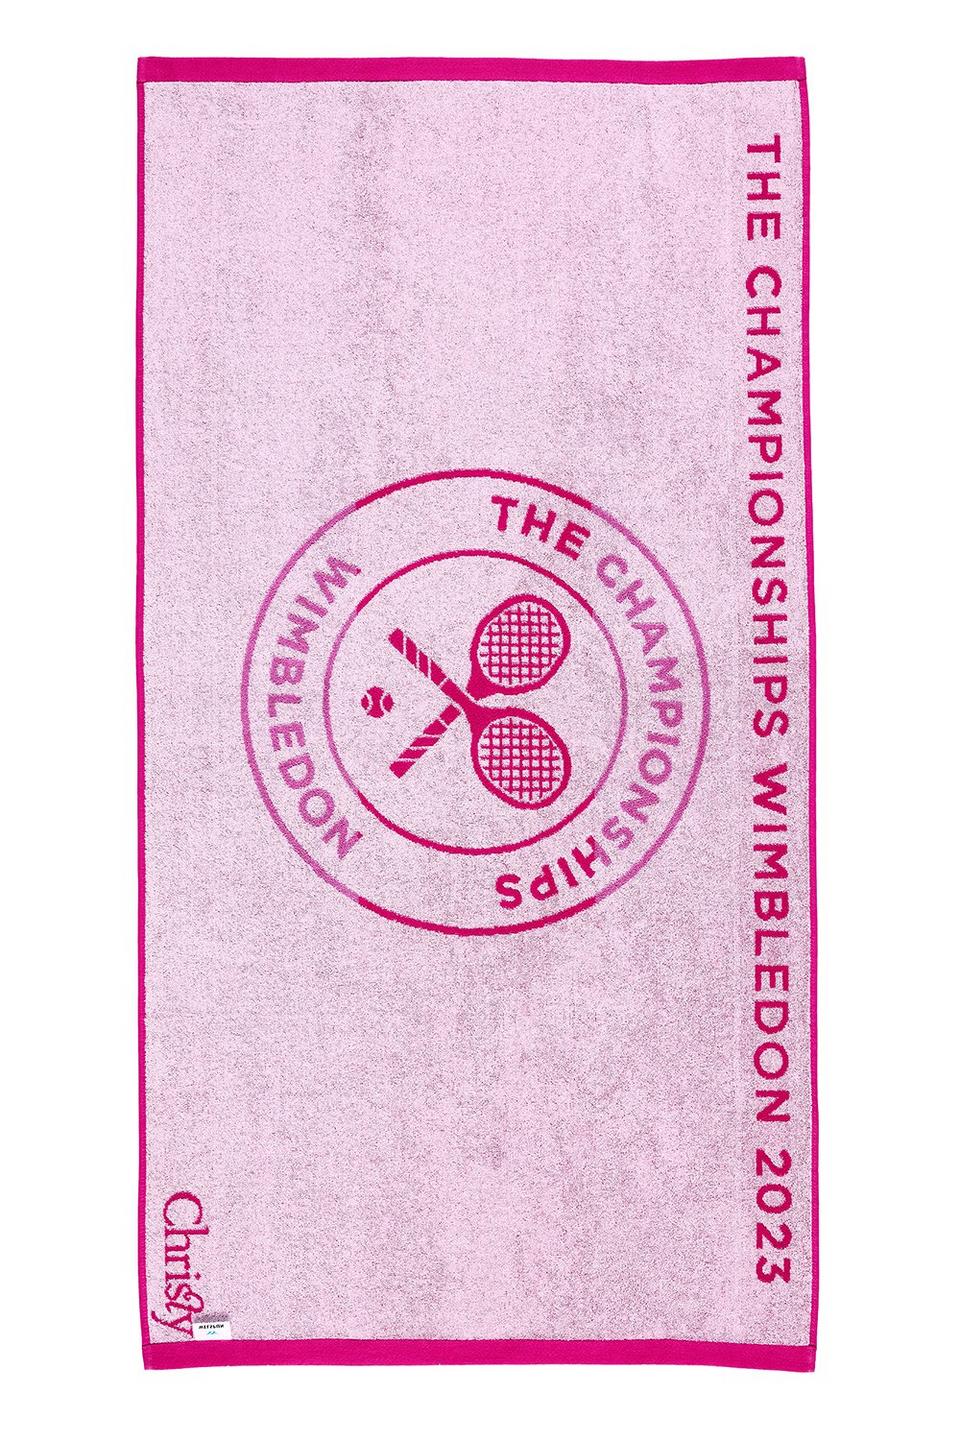 Towels | 'Wimbledon'' Championship 2023 Towel Rose & Fuchsia | CHRISTY